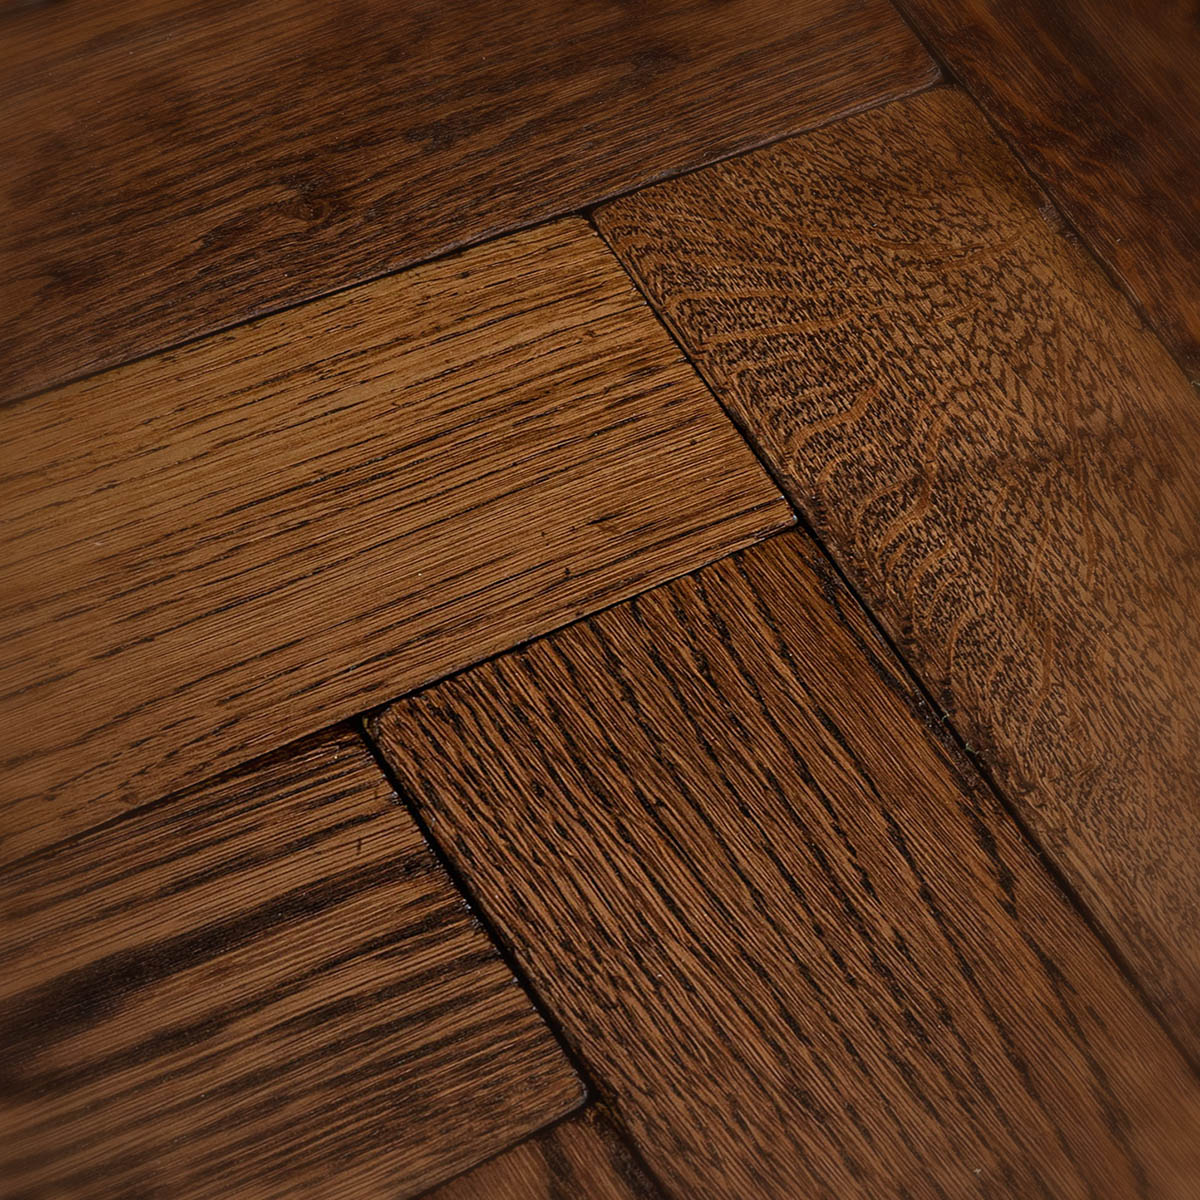 Spring Grove - Tumbled Solid Oak Parquet Floor